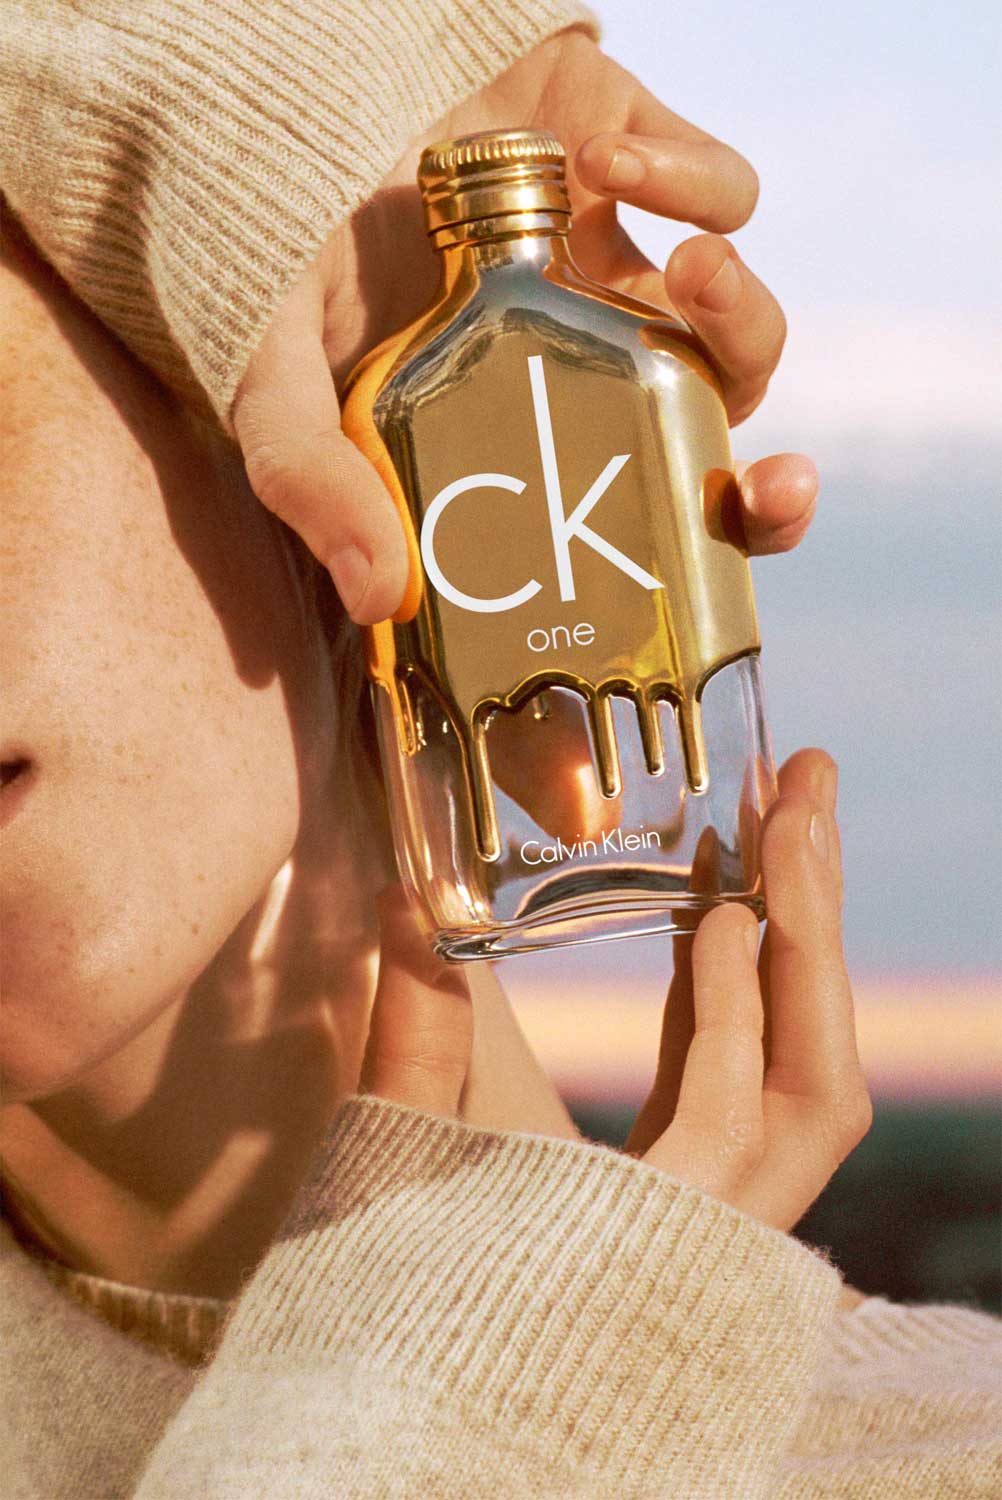 Calvin Klein CK One Gold Fragrance 2016 Campaign by Brianna Capozzi 